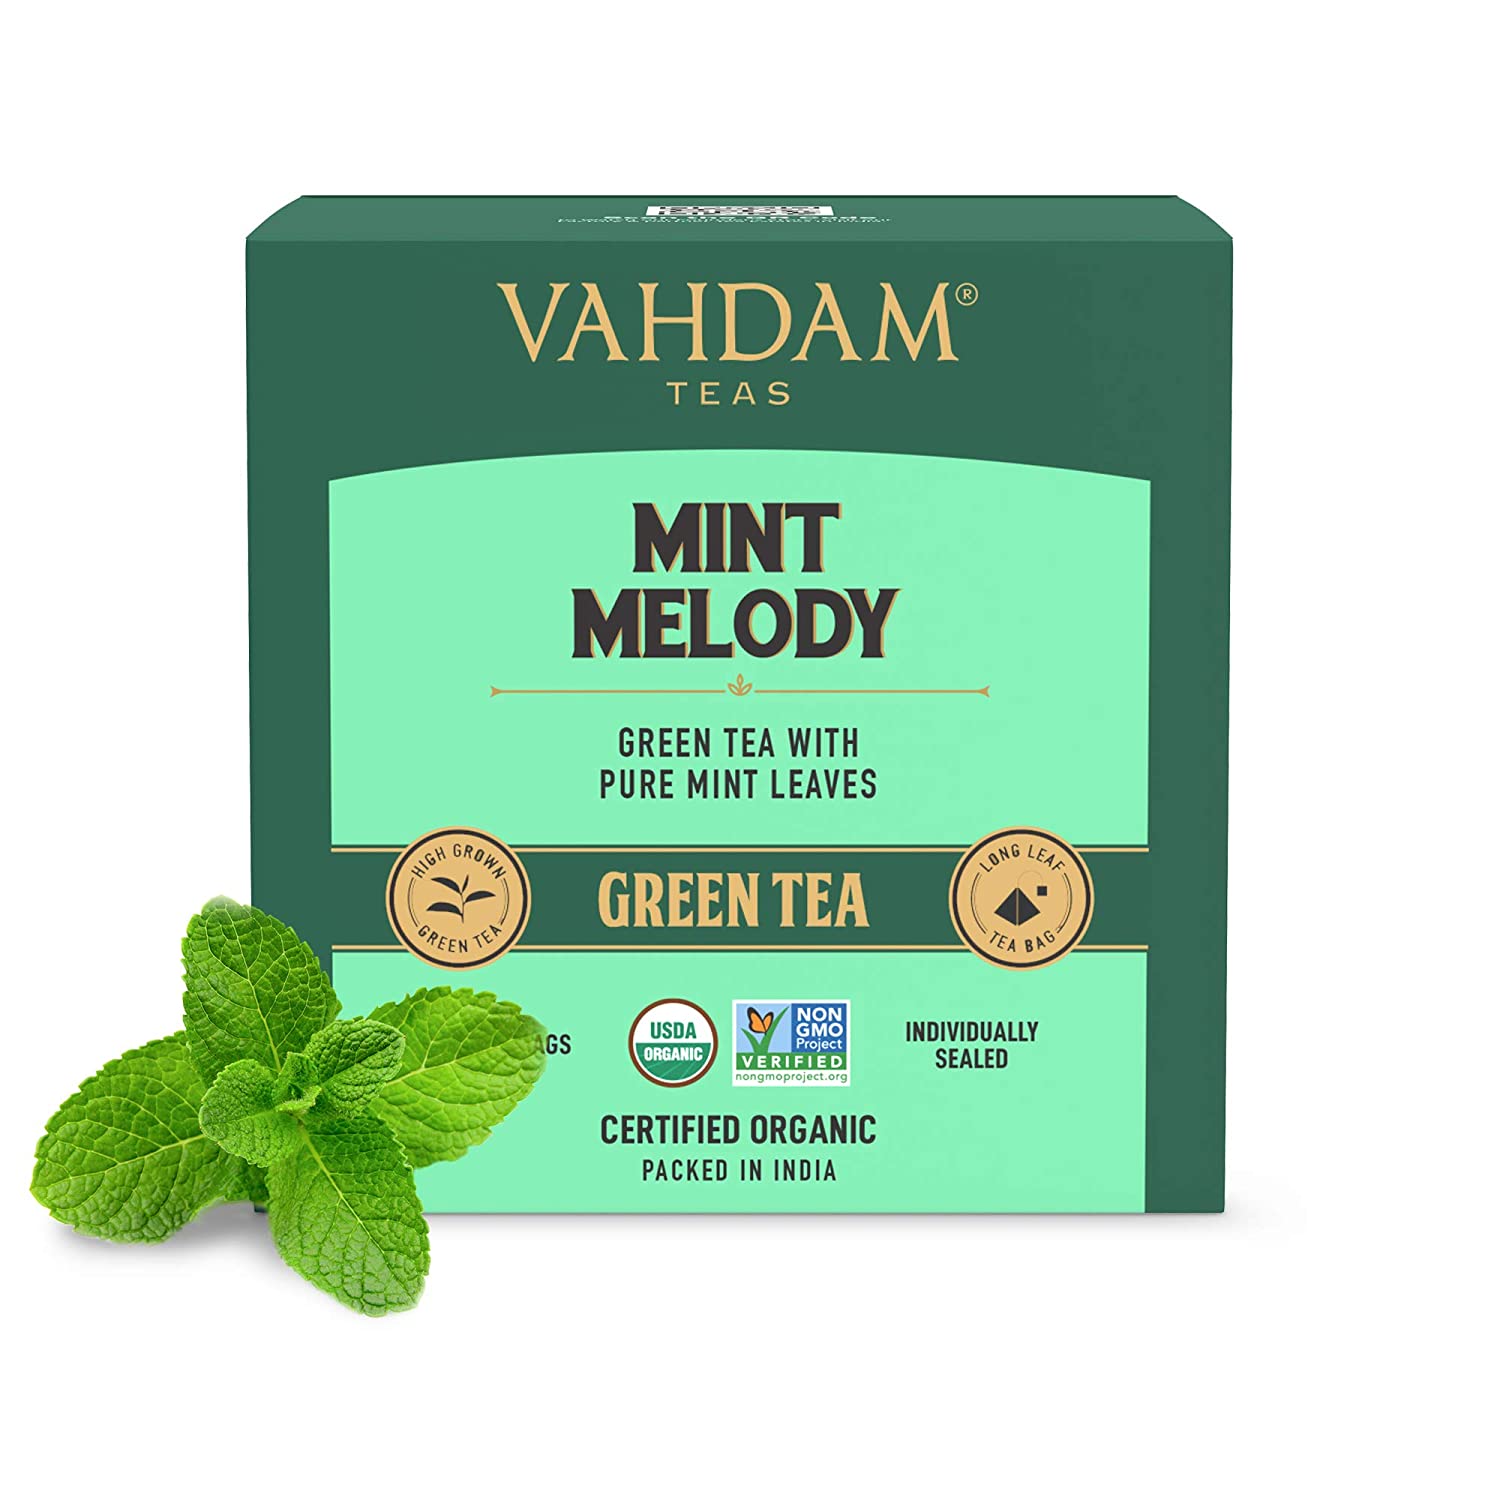 Vahdam Organic Mint Tea Image